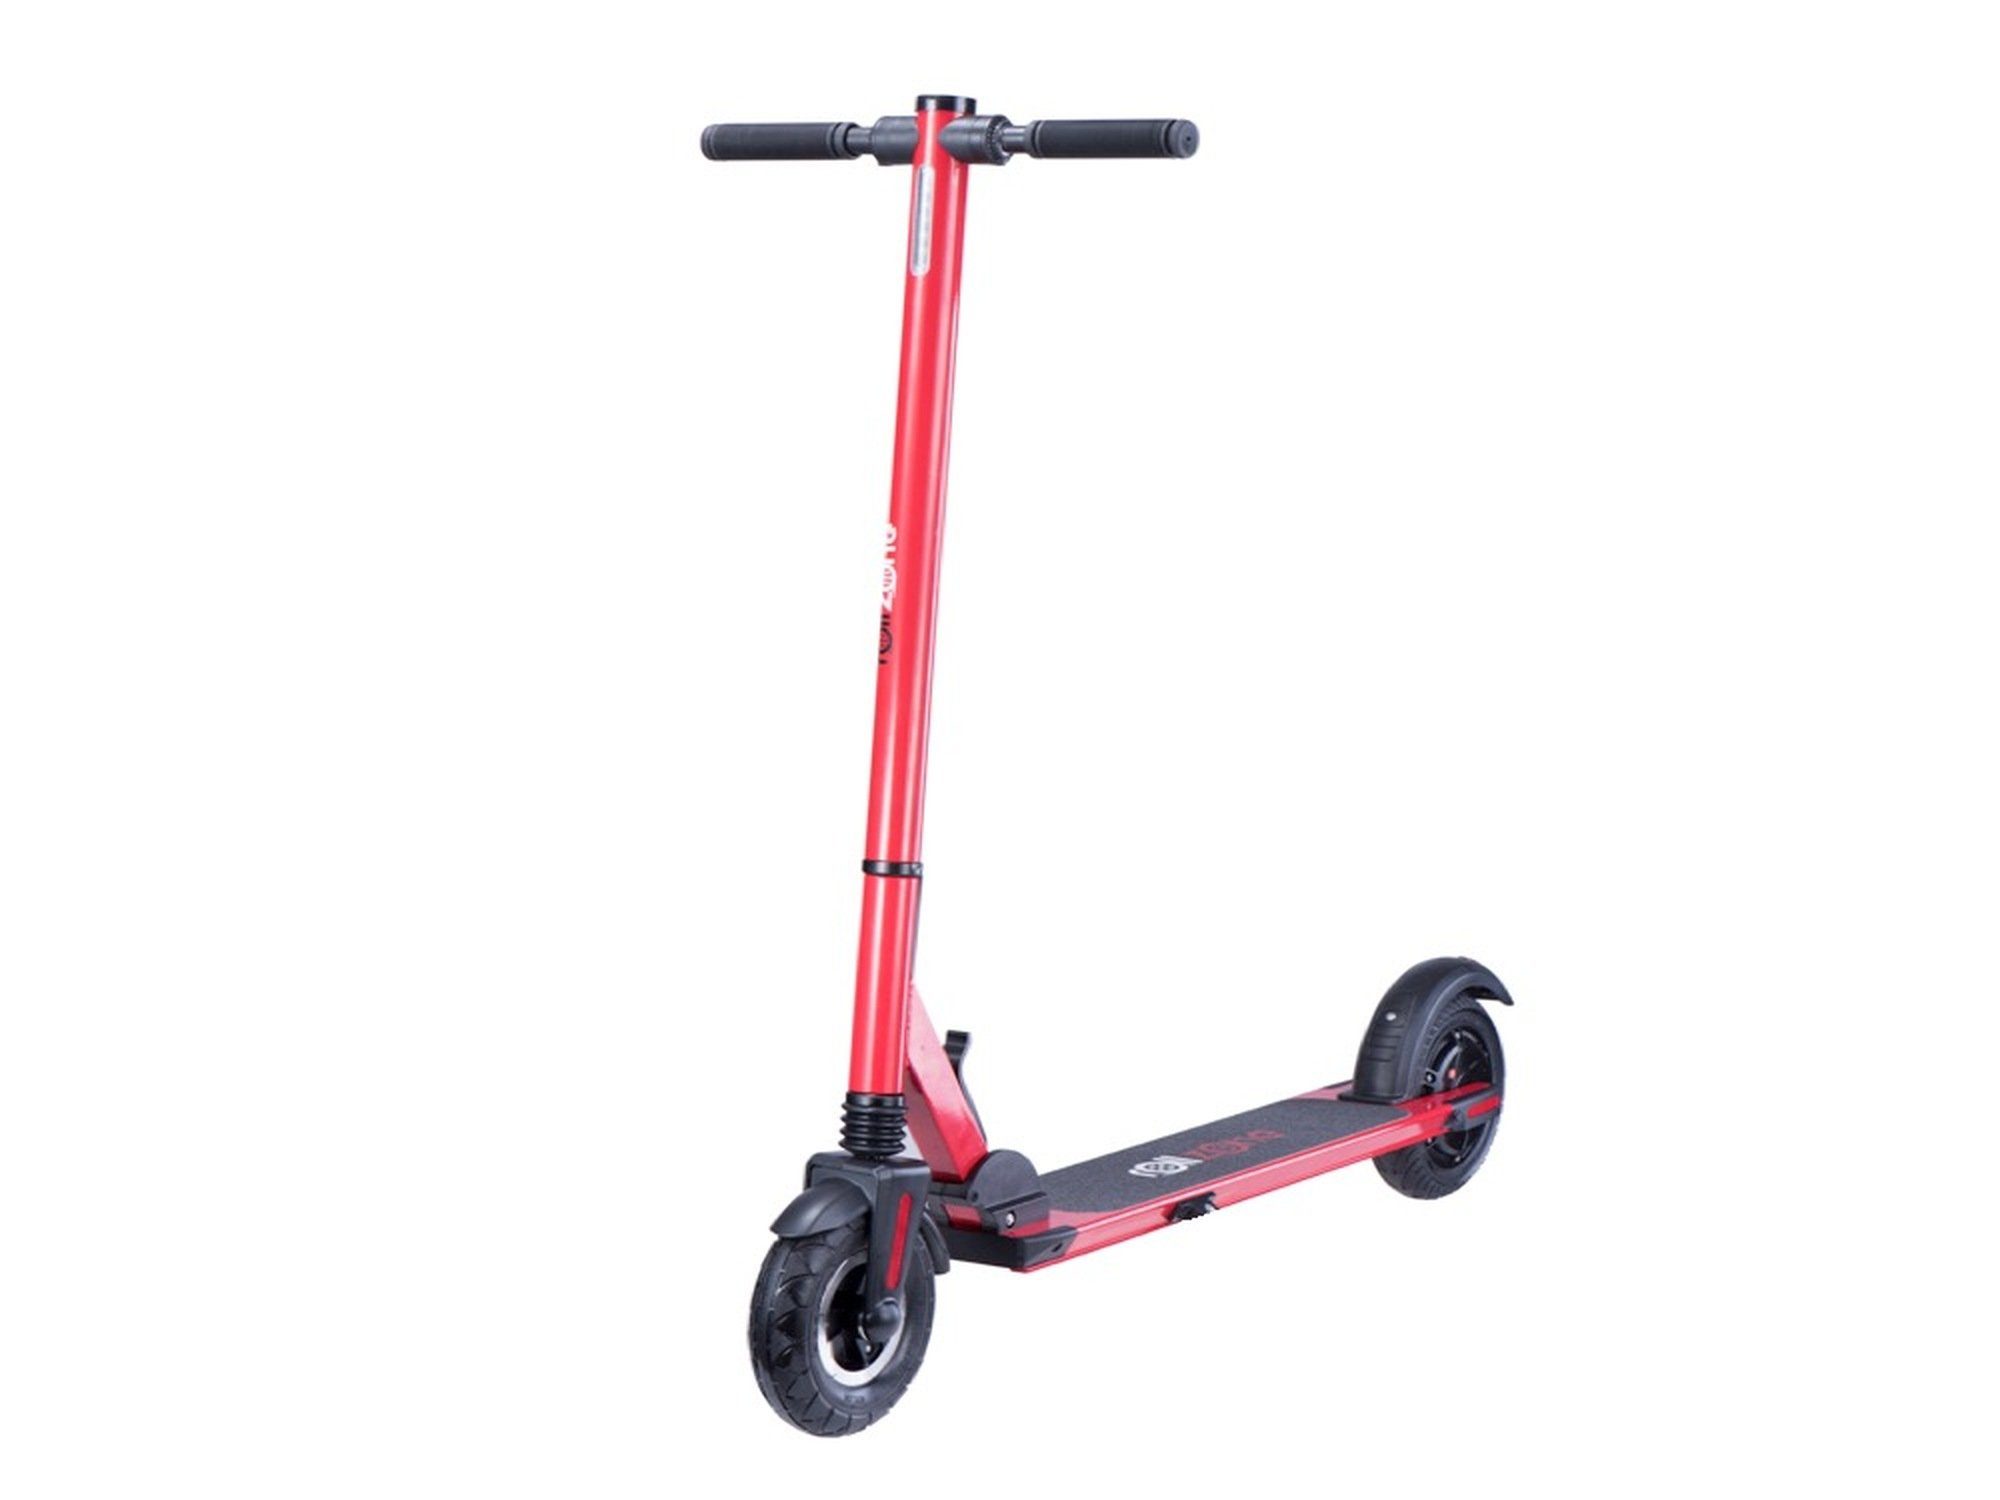 TPFLiving E-Scooter e-Scooter mit EVA-Gummireifen, Kunstledersitz und LED- Beleuchtung, maximale Traglast bis 100 kg - Farbe: rot